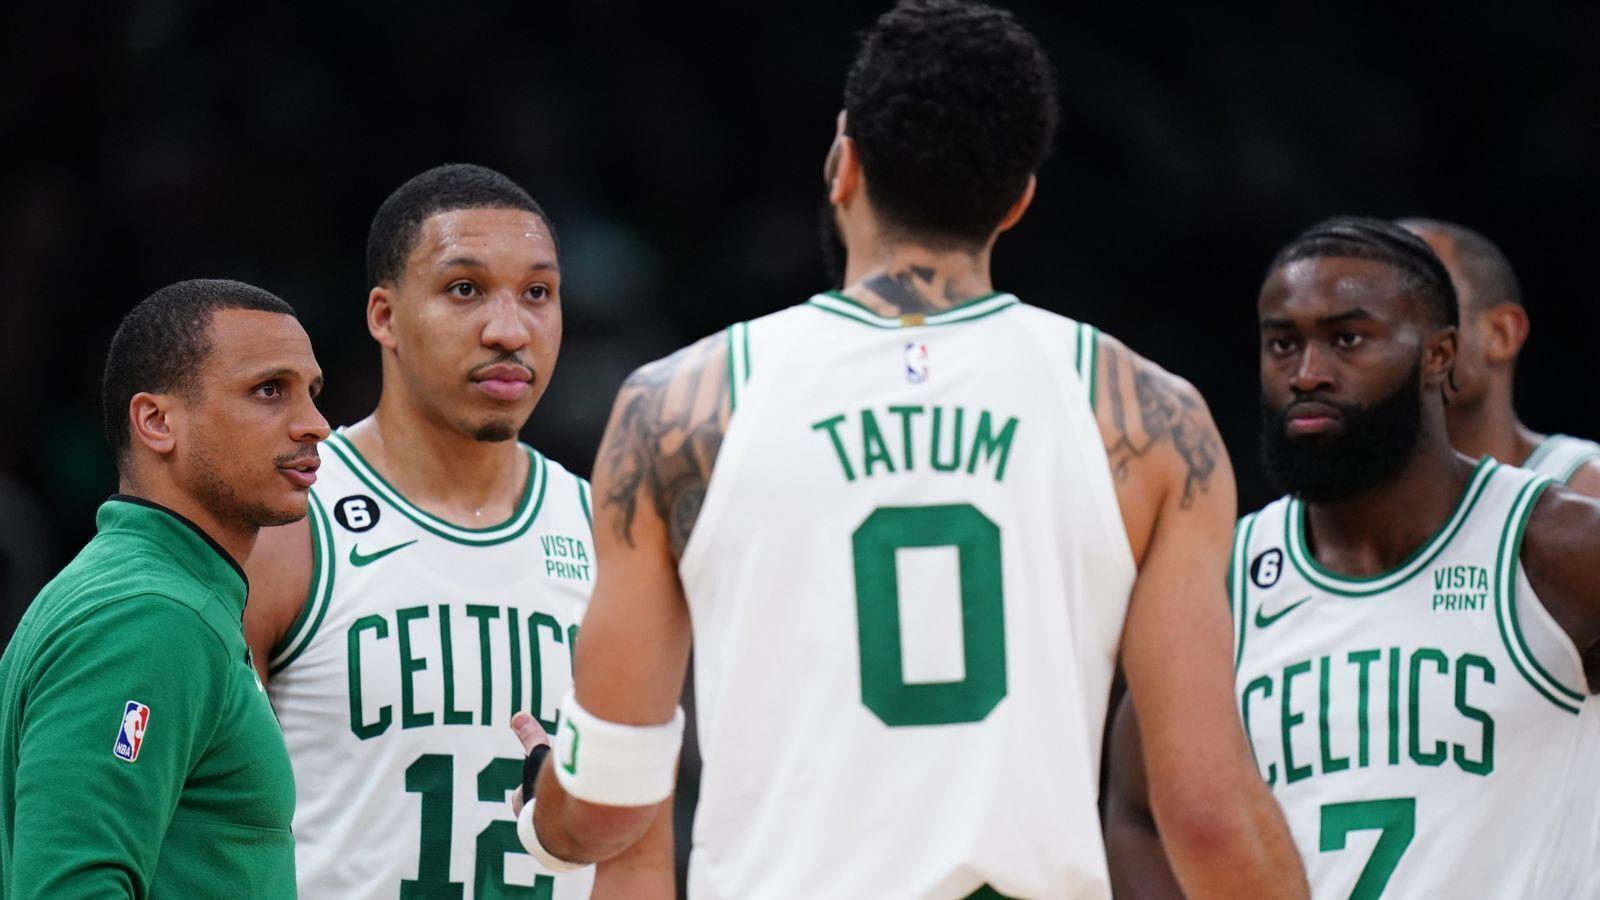 Tatum has 40 points, Celtics rout NBA-leading Bucks 140-99 - The